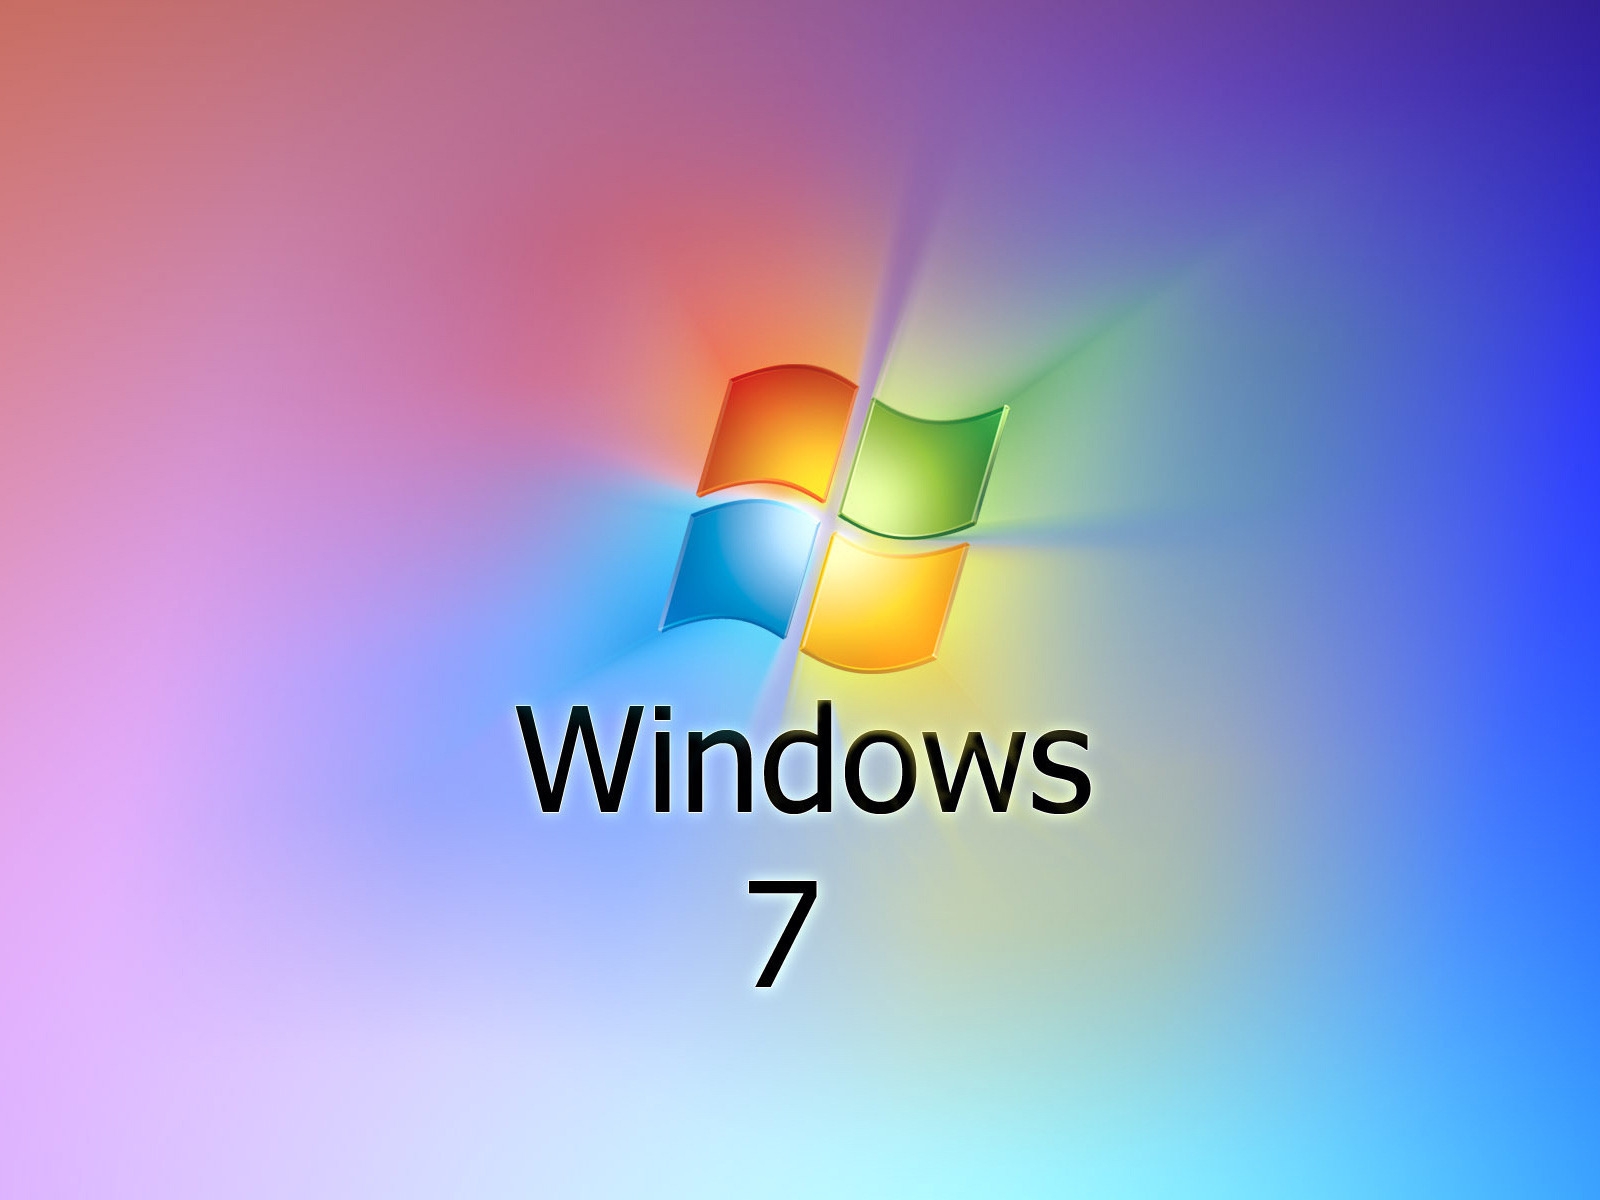 Windows 7 Simple HD Wallpaper - WallpaperFX